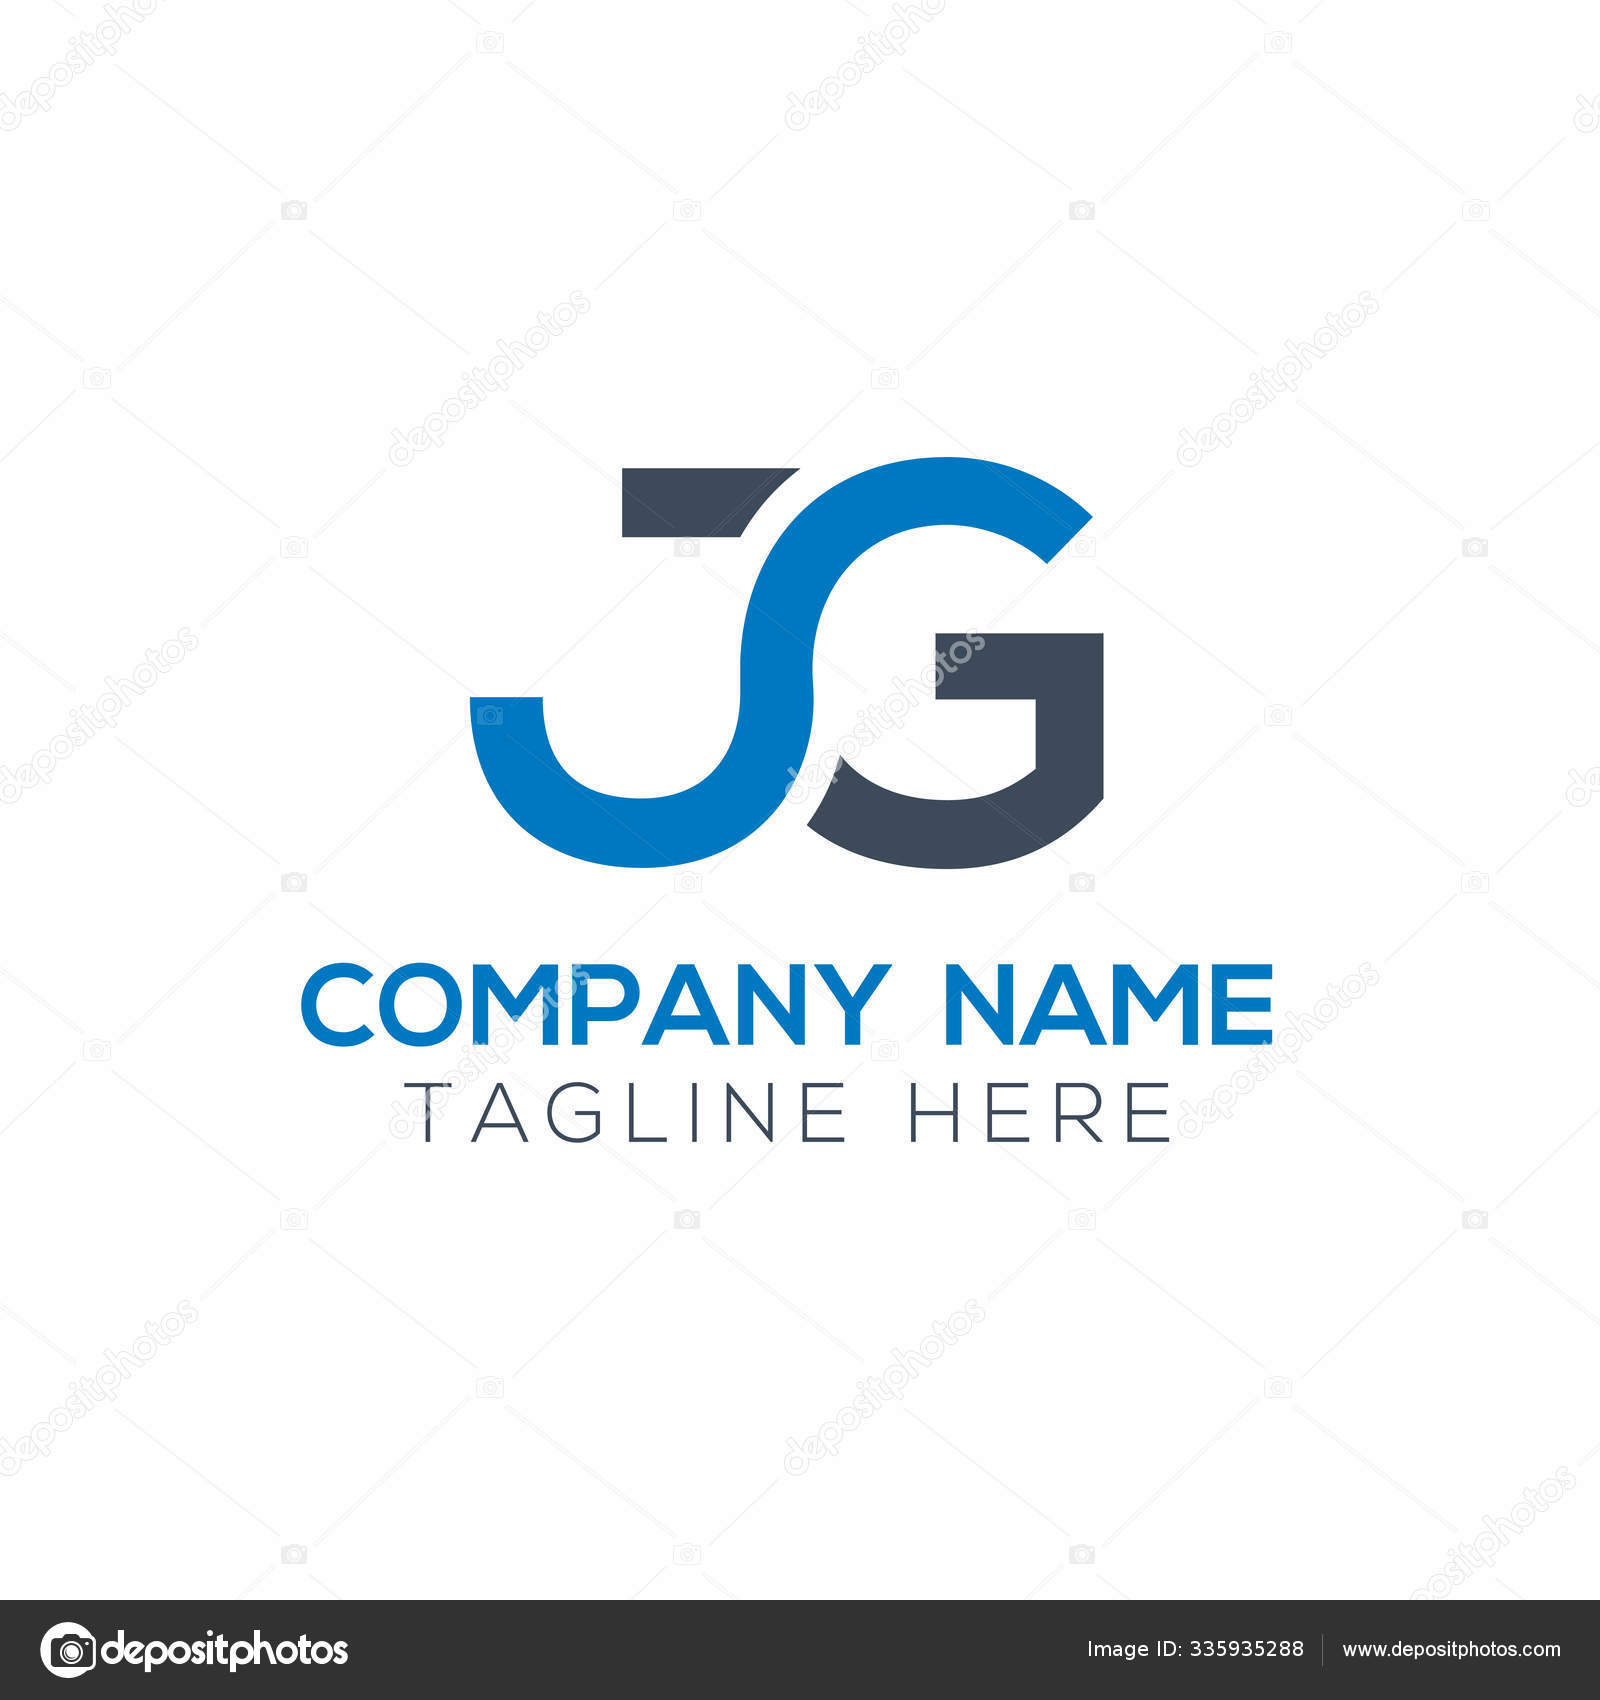 1 401 Jg Logo Vector Images Free Royalty Free Jg Logo Vectors Depositphotos